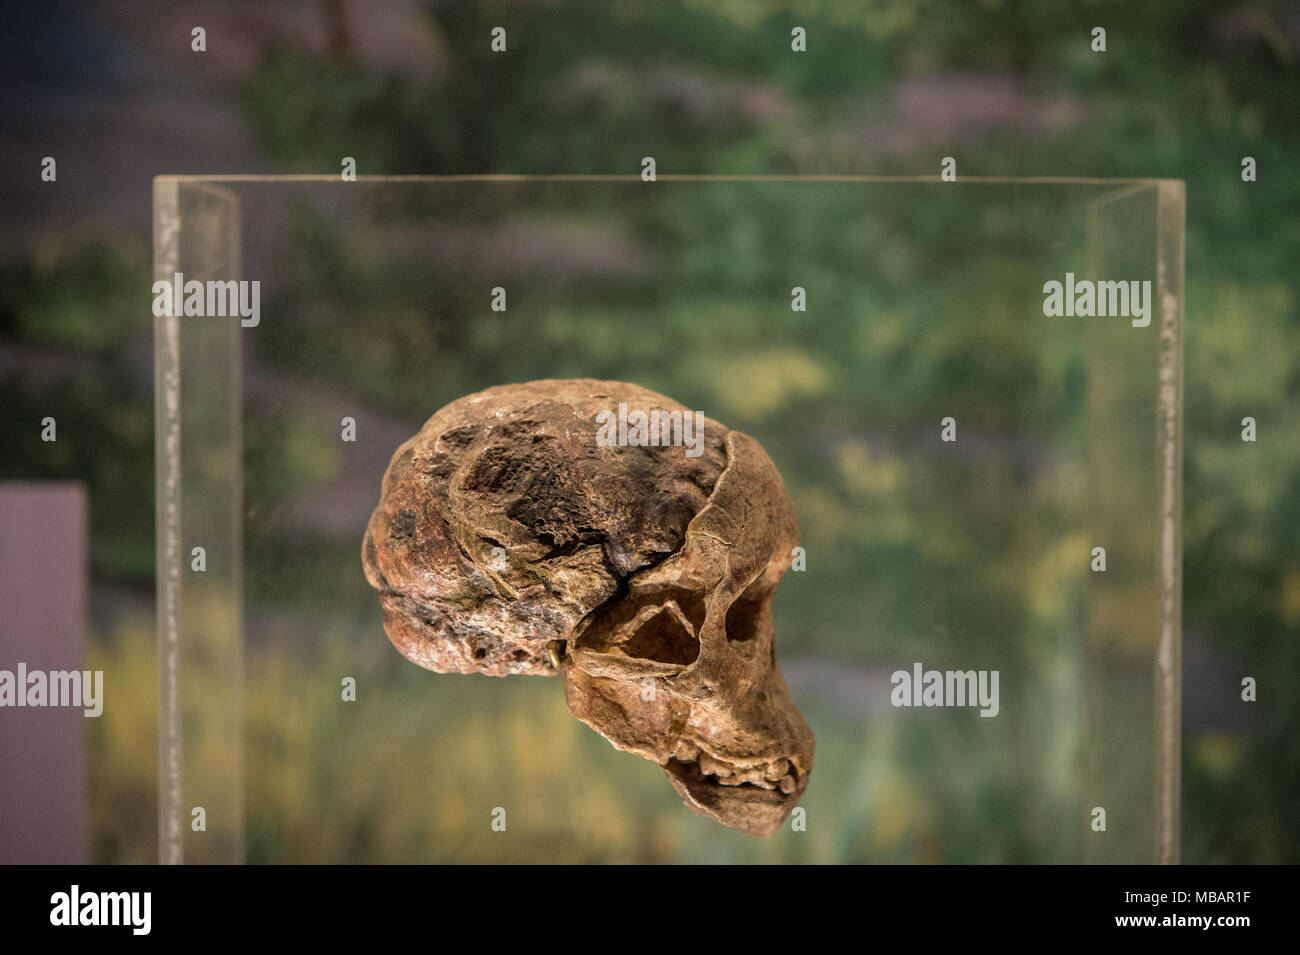 Parzial novellame cranio di hominin Australopithecines, Australopitecus africanus, Taung, Sud Africa, 2-3 milioni di anni. Nairobi National Museum Foto Stock